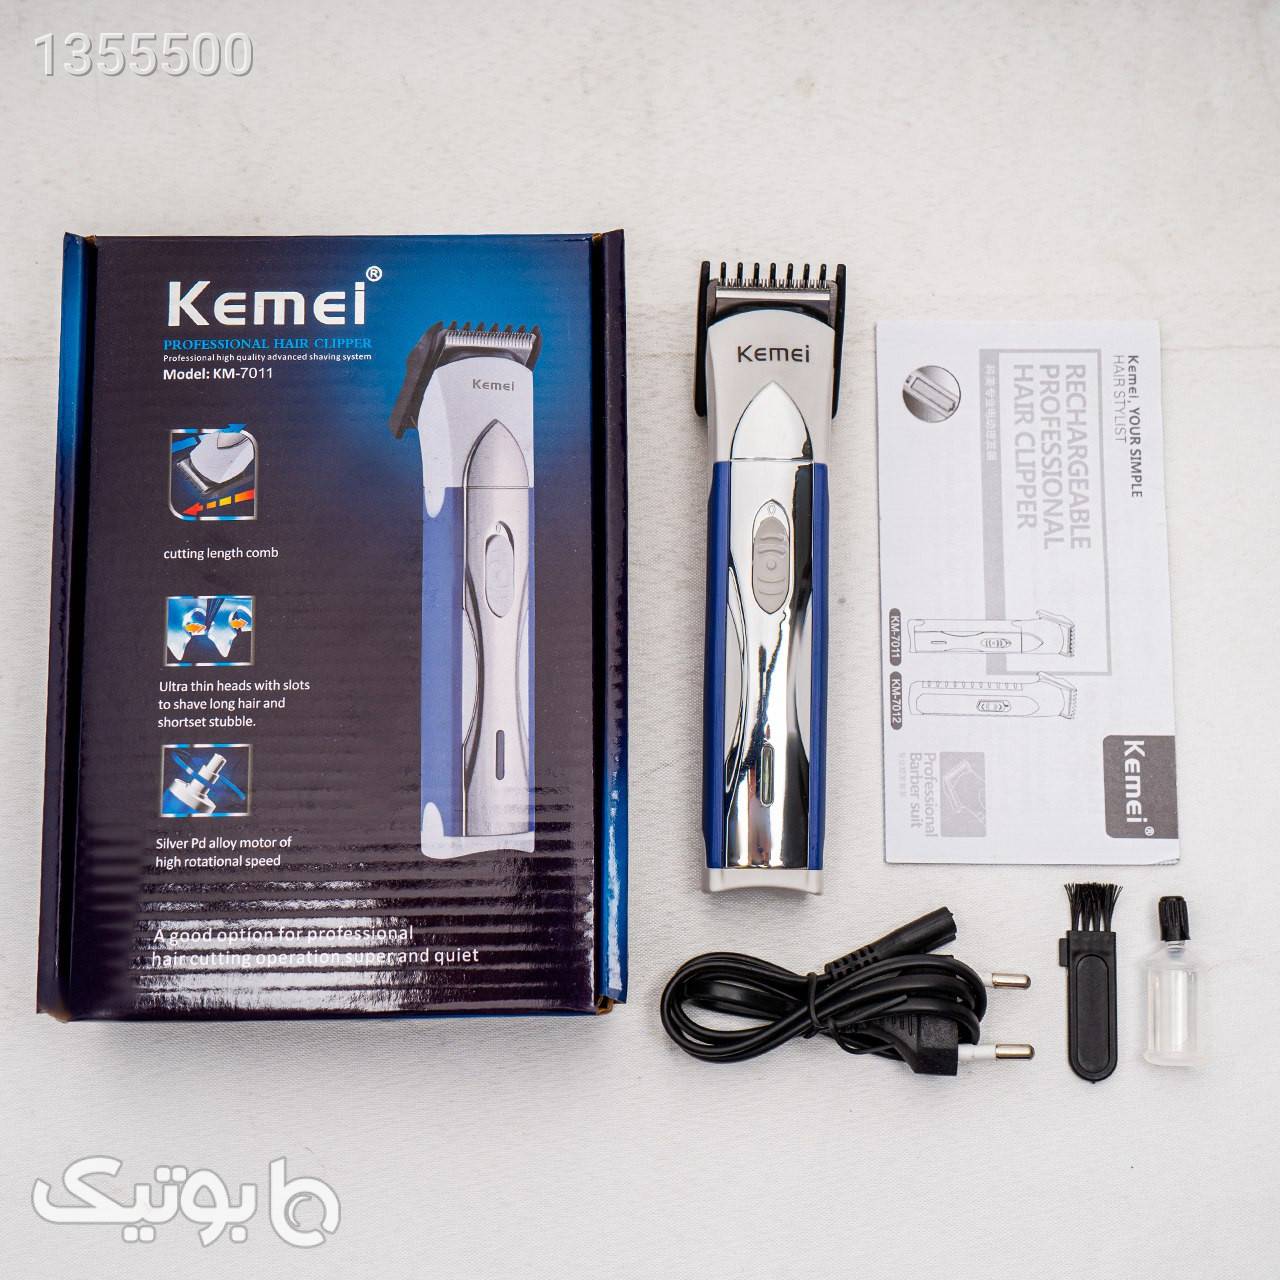 ماشين اصلاح Kemei مدل KM-7011  نقره ای لوازم شخصی برقی